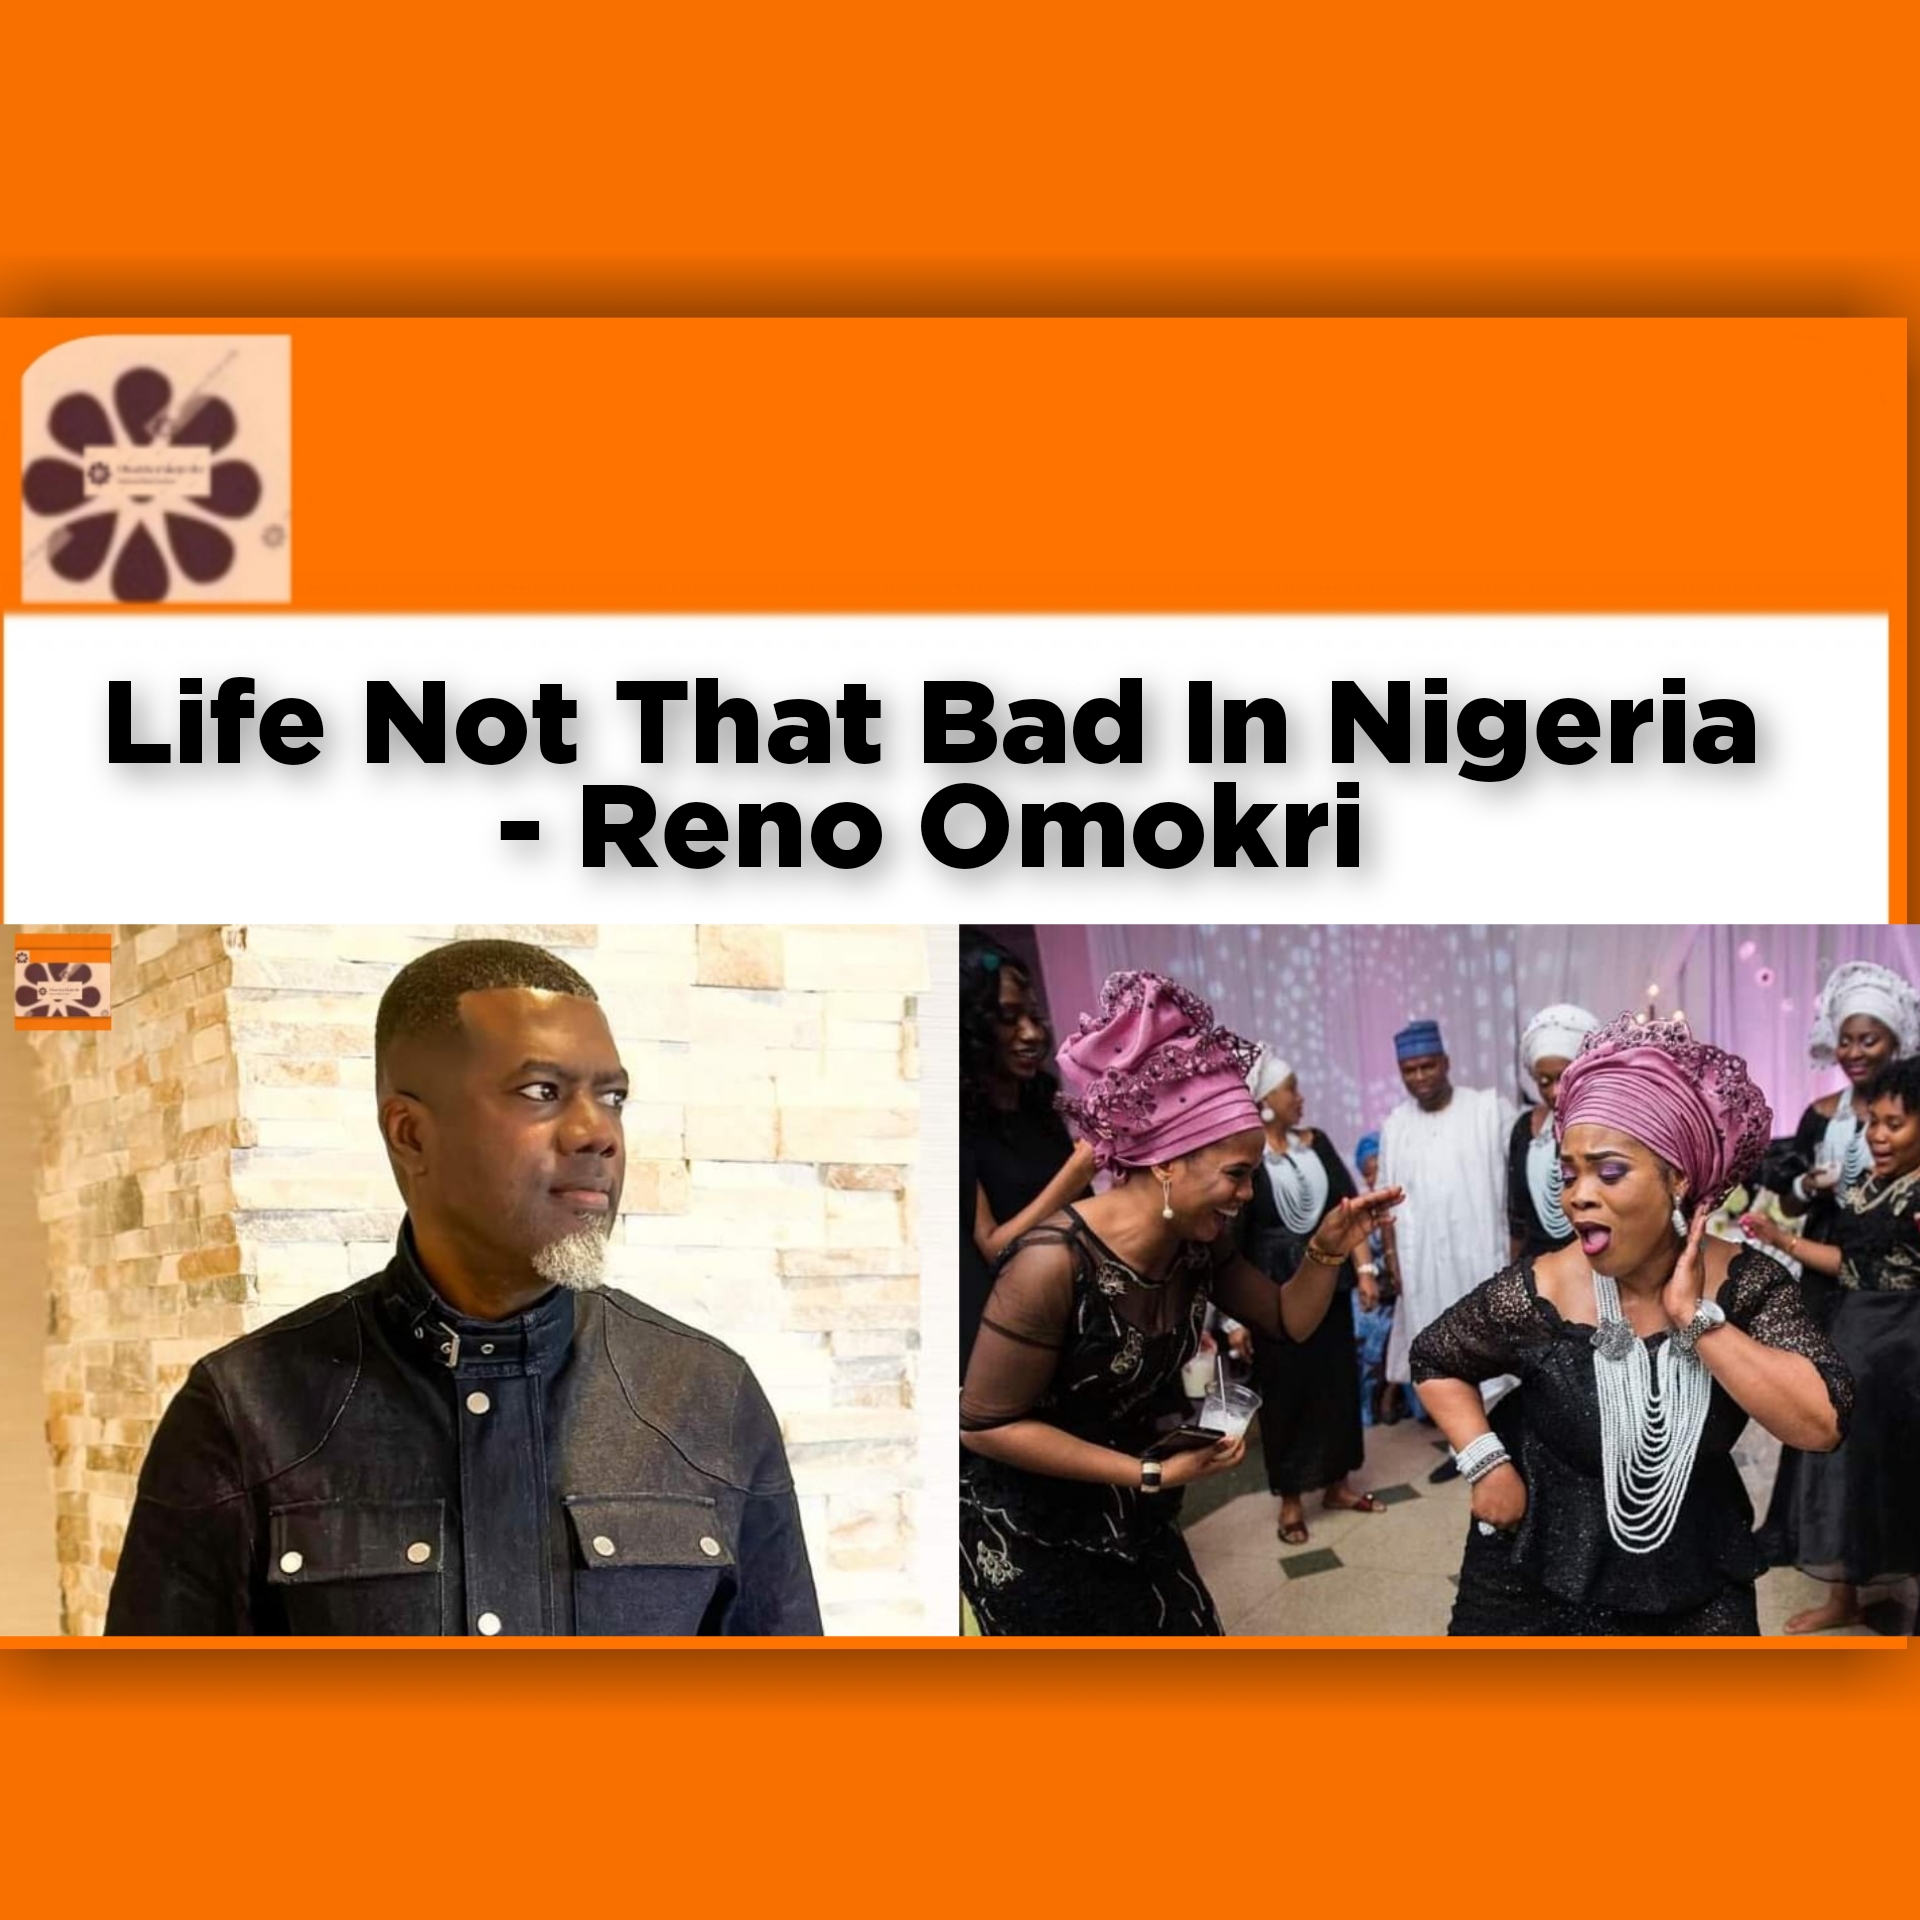 Life Not That Bad In Nigeria - Reno Omokri ~ OsazuwaAkonedo #Nigeria